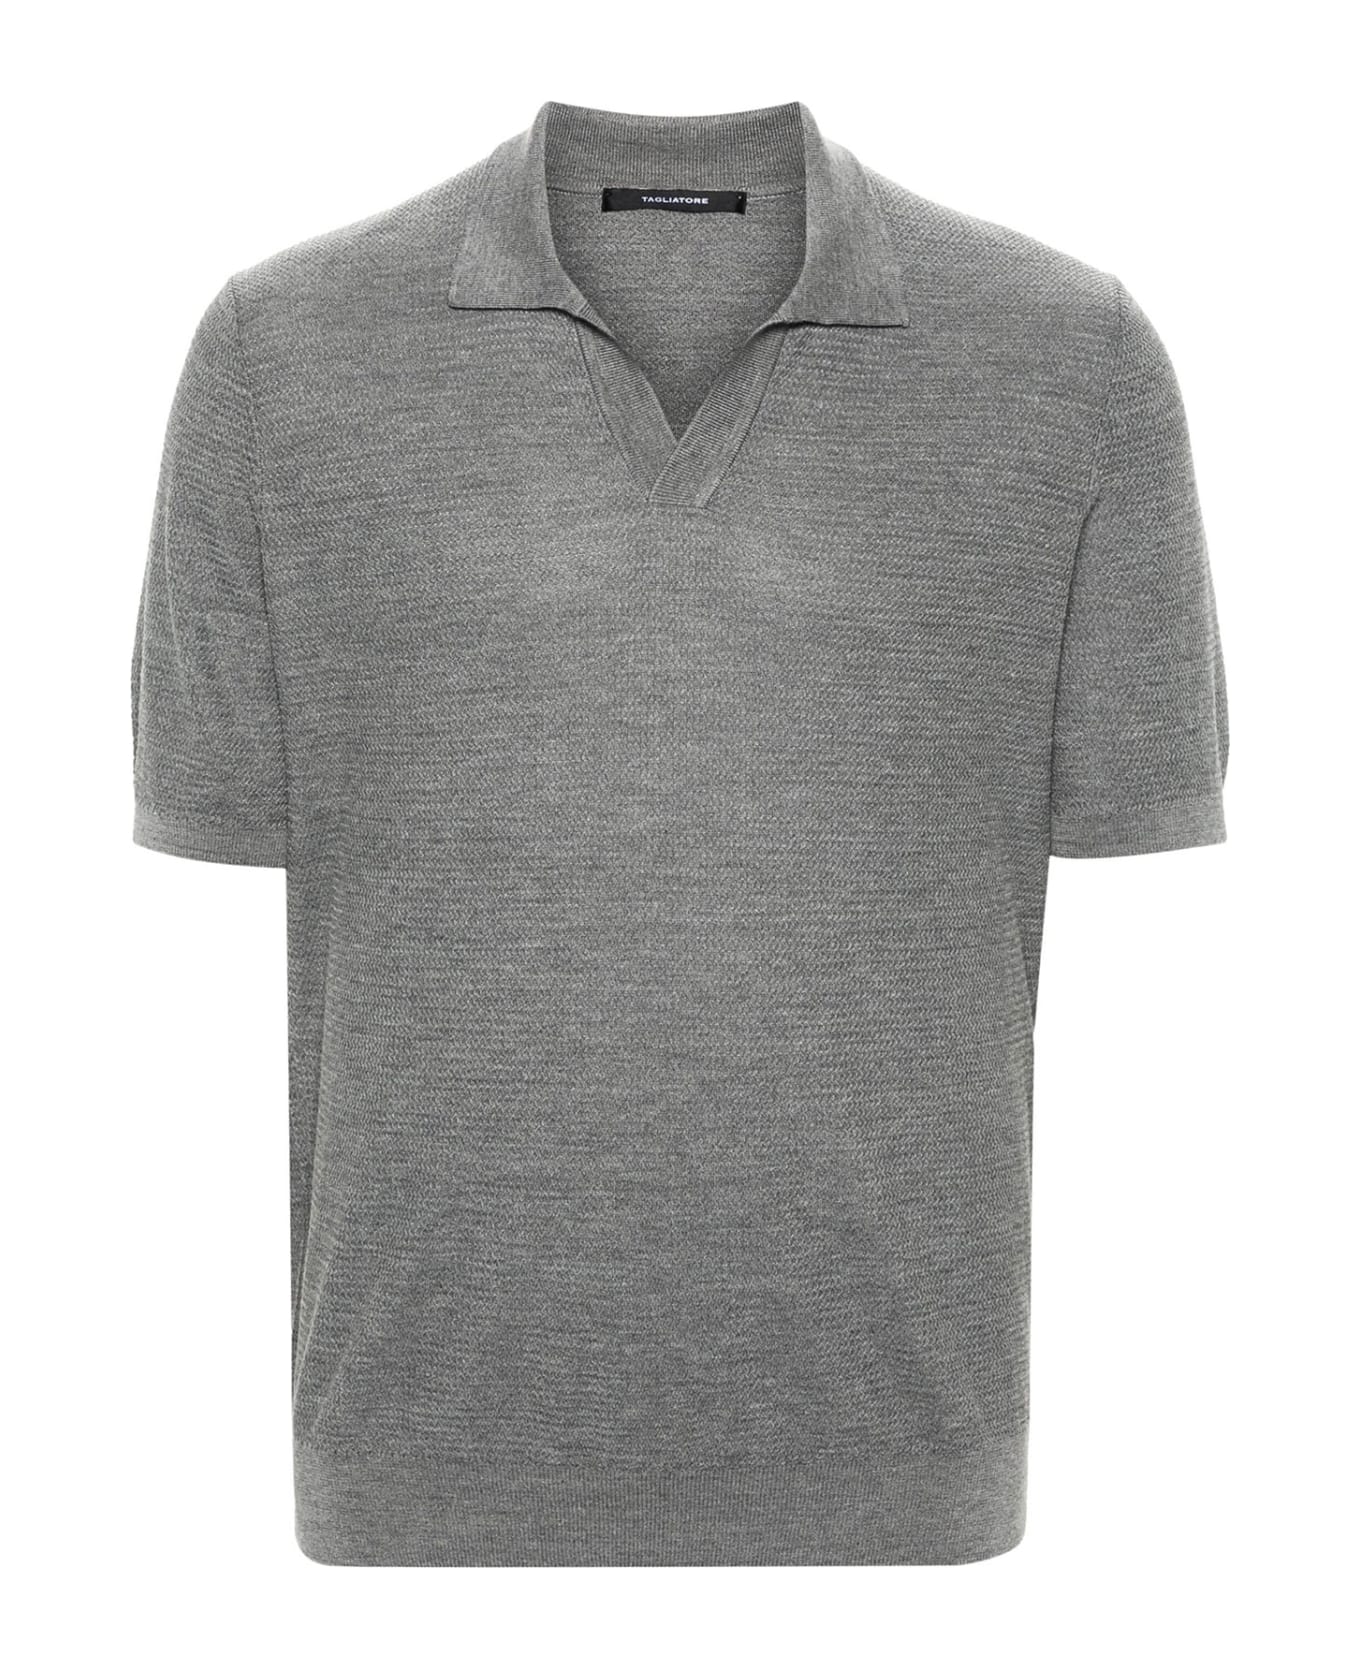 Tagliatore Gray Polo Shirt With Short Sleeves - GRIGIO/SILVER